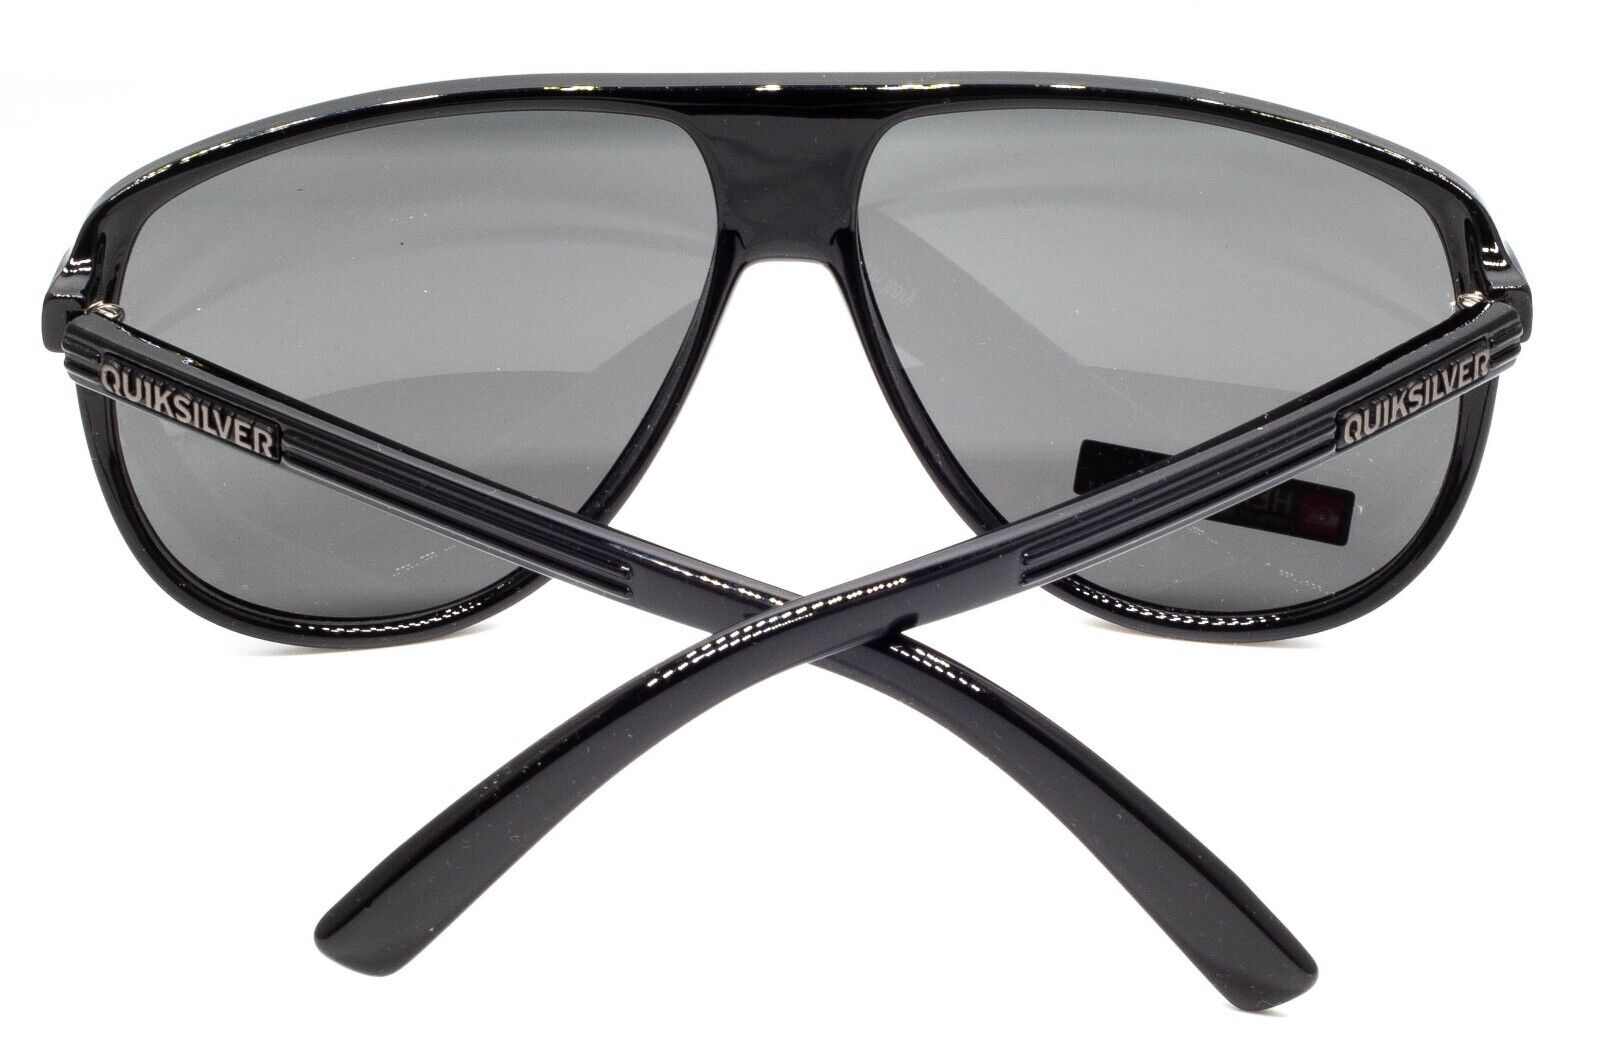 Shades 229 GGV Glasses 4231441 Eyewear Sunglasses 59mm - HEAT QS1176 -Italy QUIKSILVER Eyewear